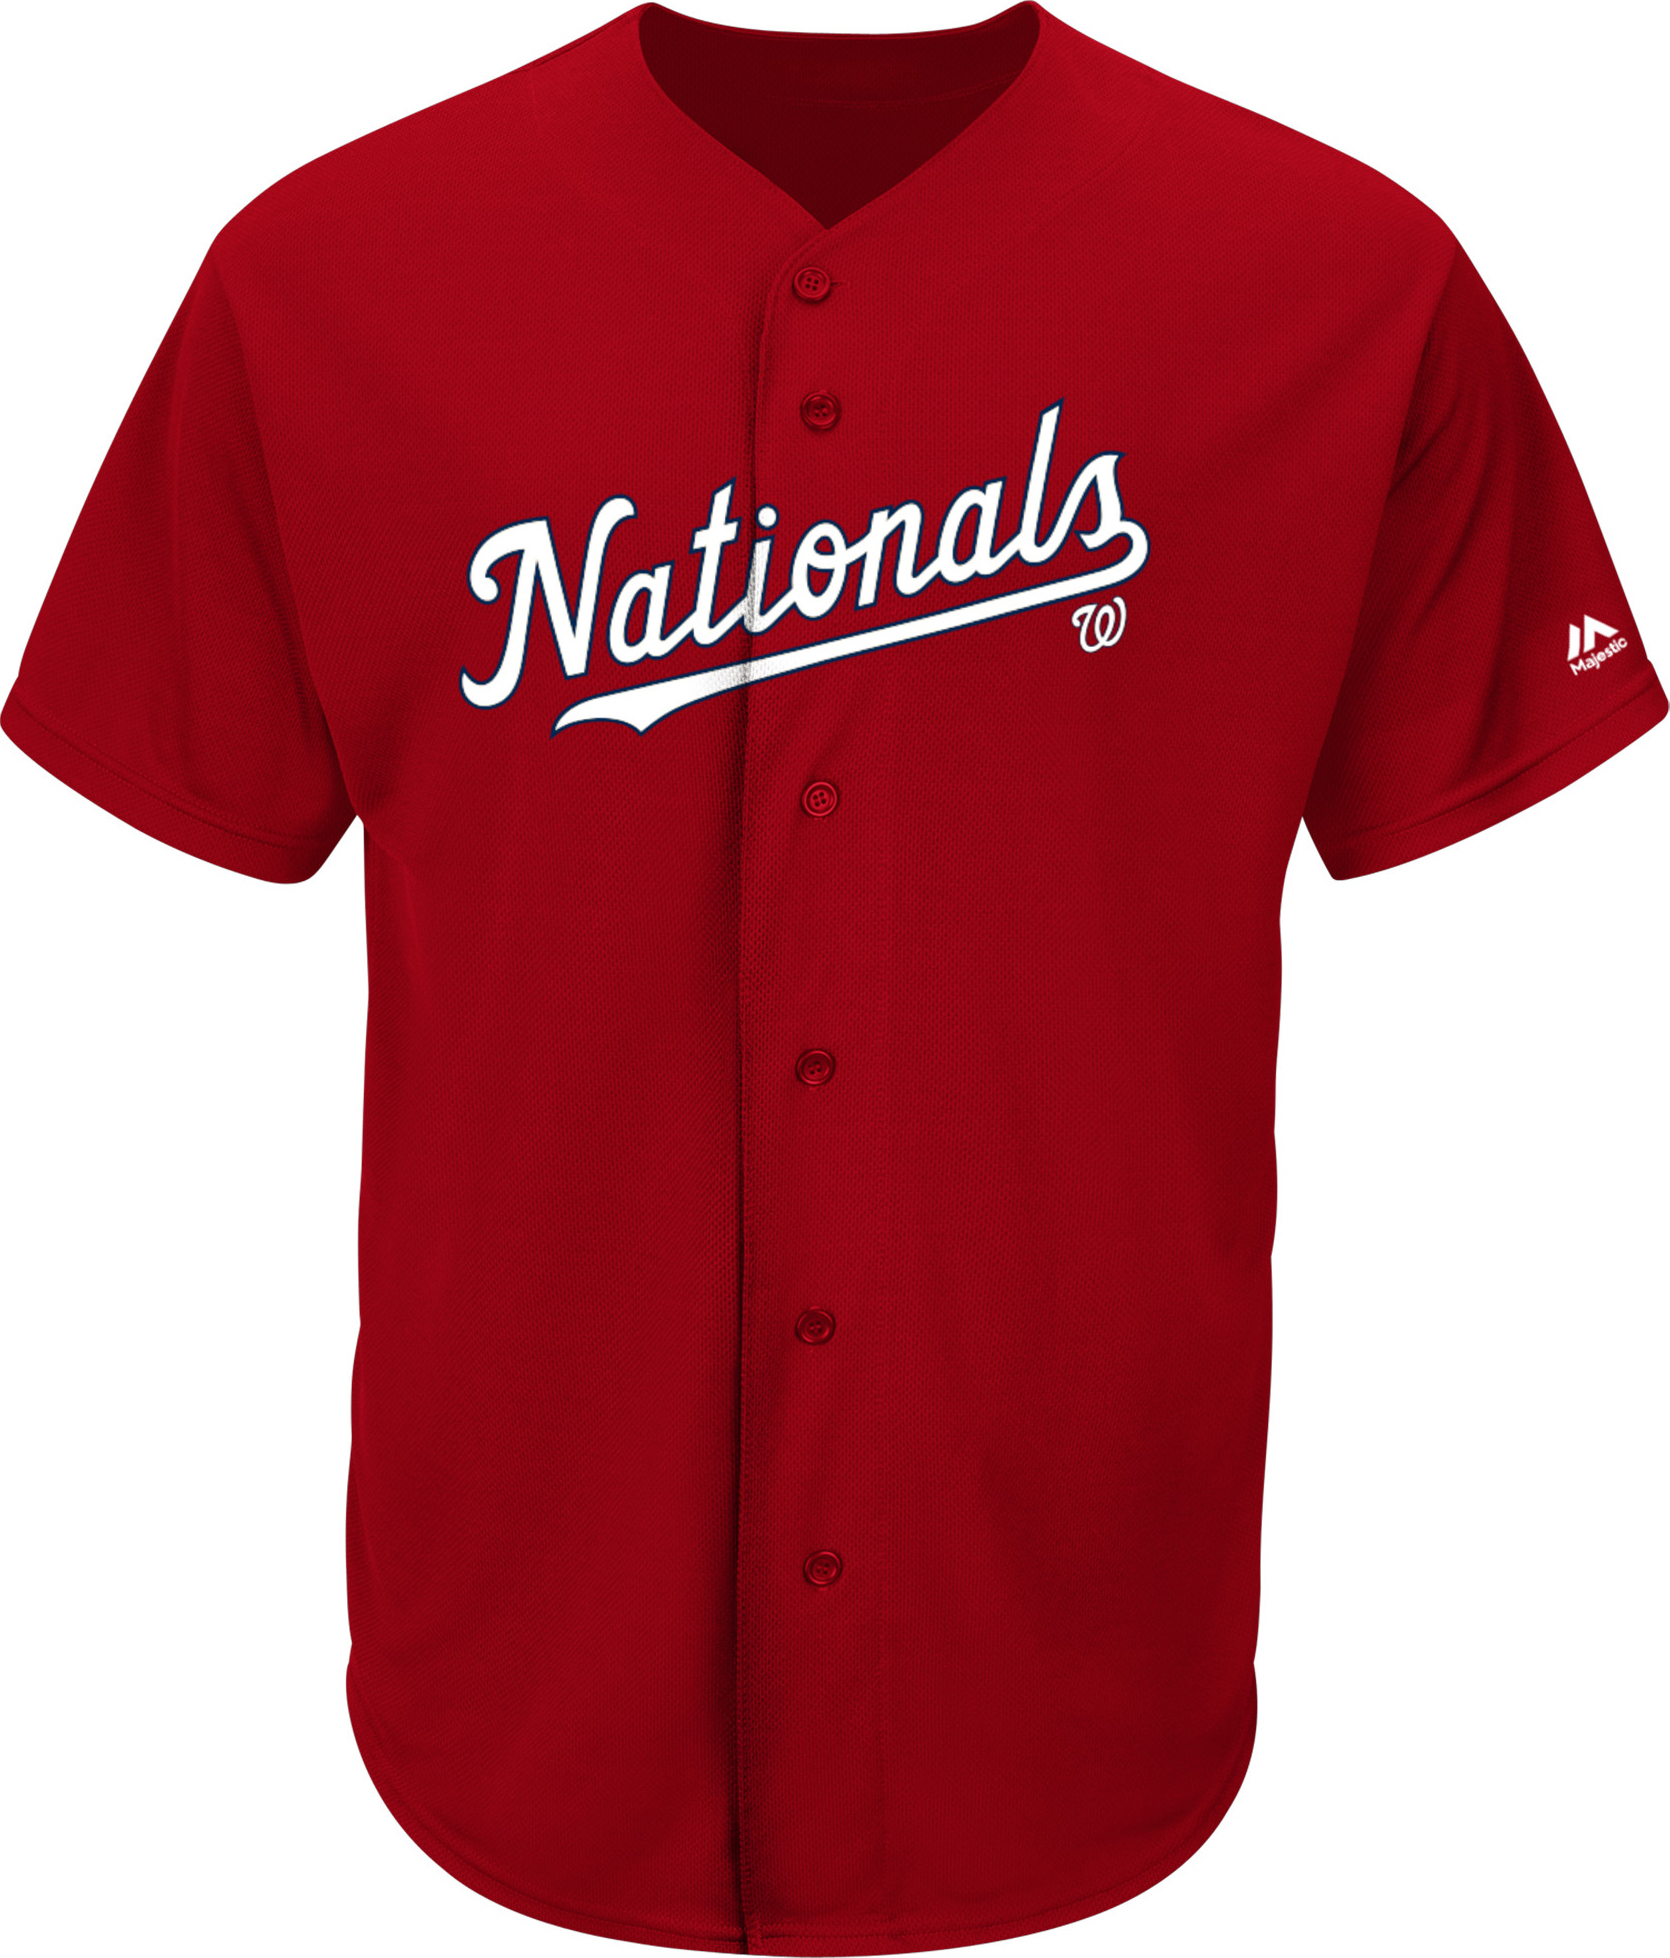 E134480 Majestic MLB Nationals Pro Style Game Jerseys